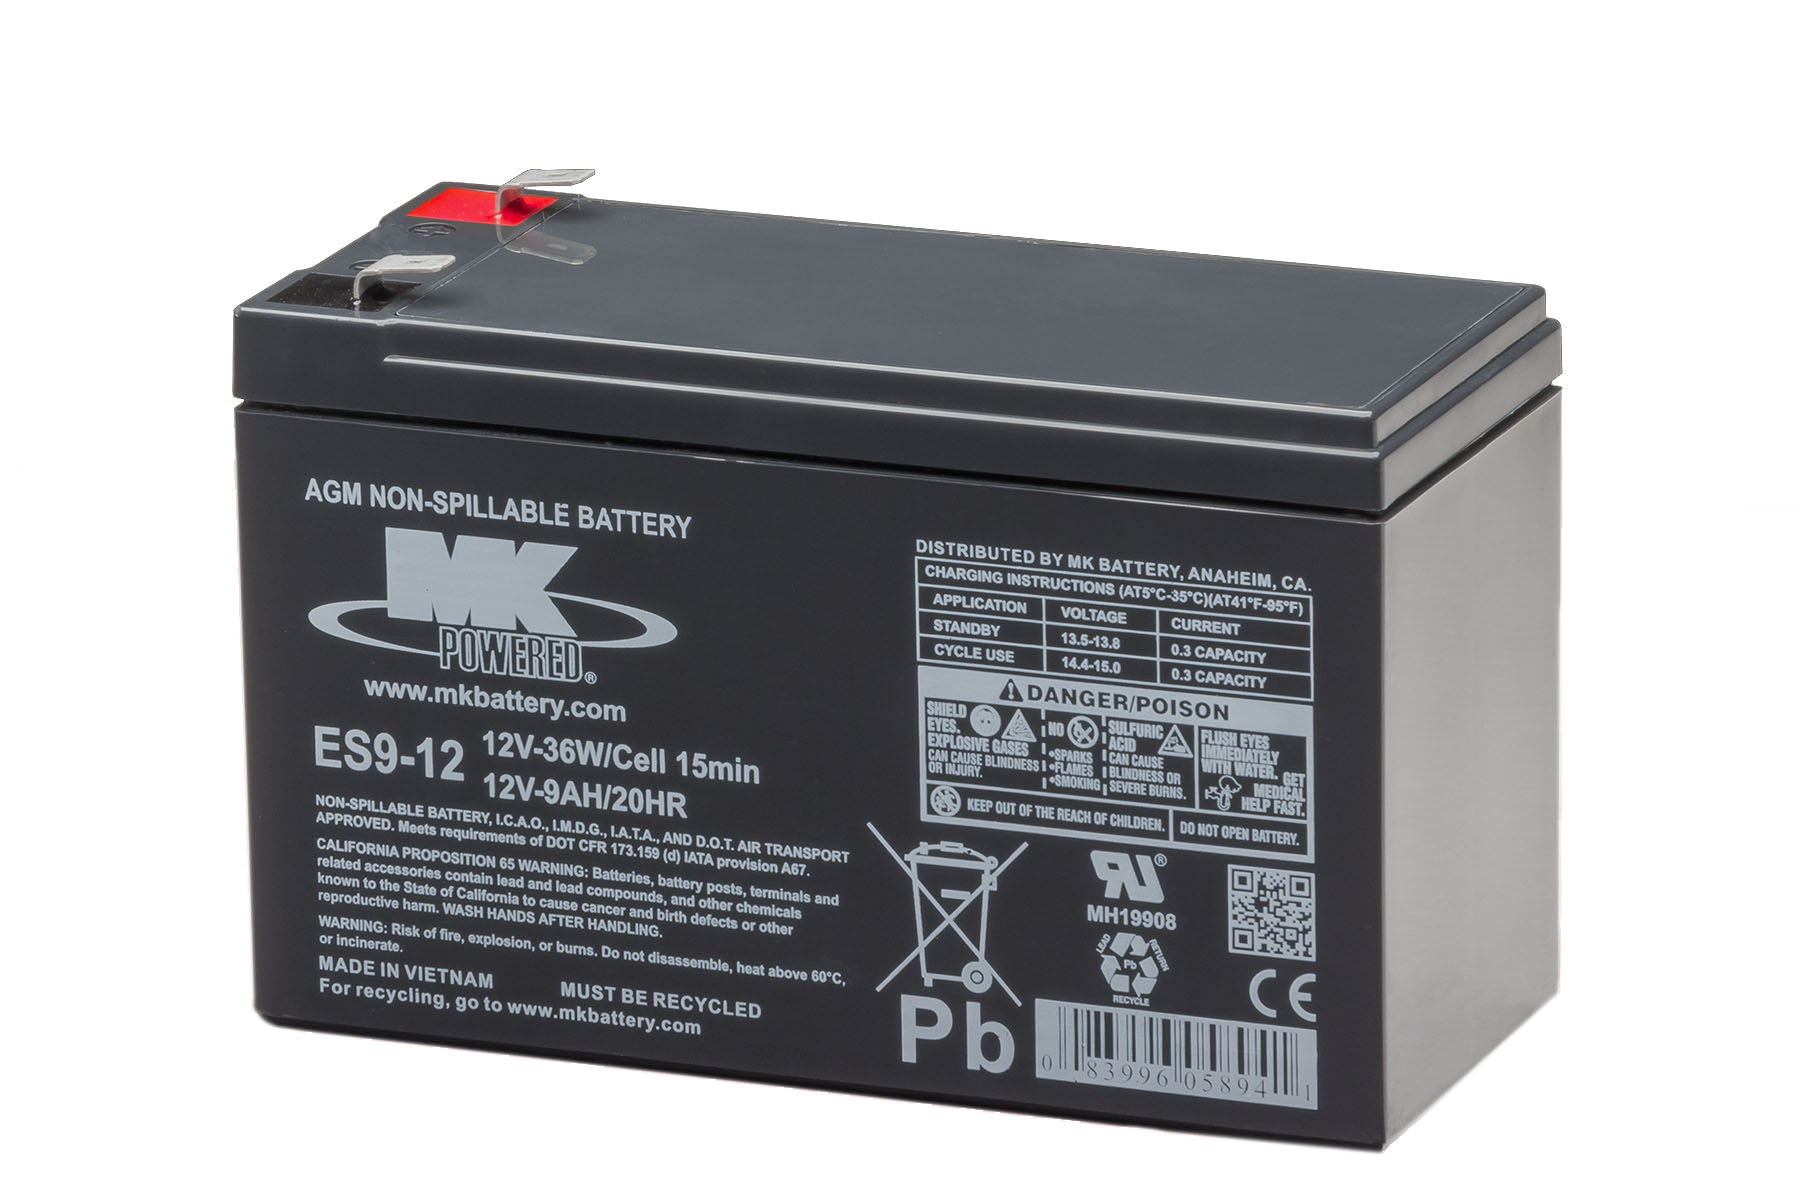 Battery 12 12. Ms7-12 12v7ah/20hr. Аккумуляторная батарея DTS 1207 - Sealed lead acid Battery-12v 7ah. Гелевый аккумулятор 12v 7ah. Аккумулятор 12v 7.2Ah djw12-7.2.